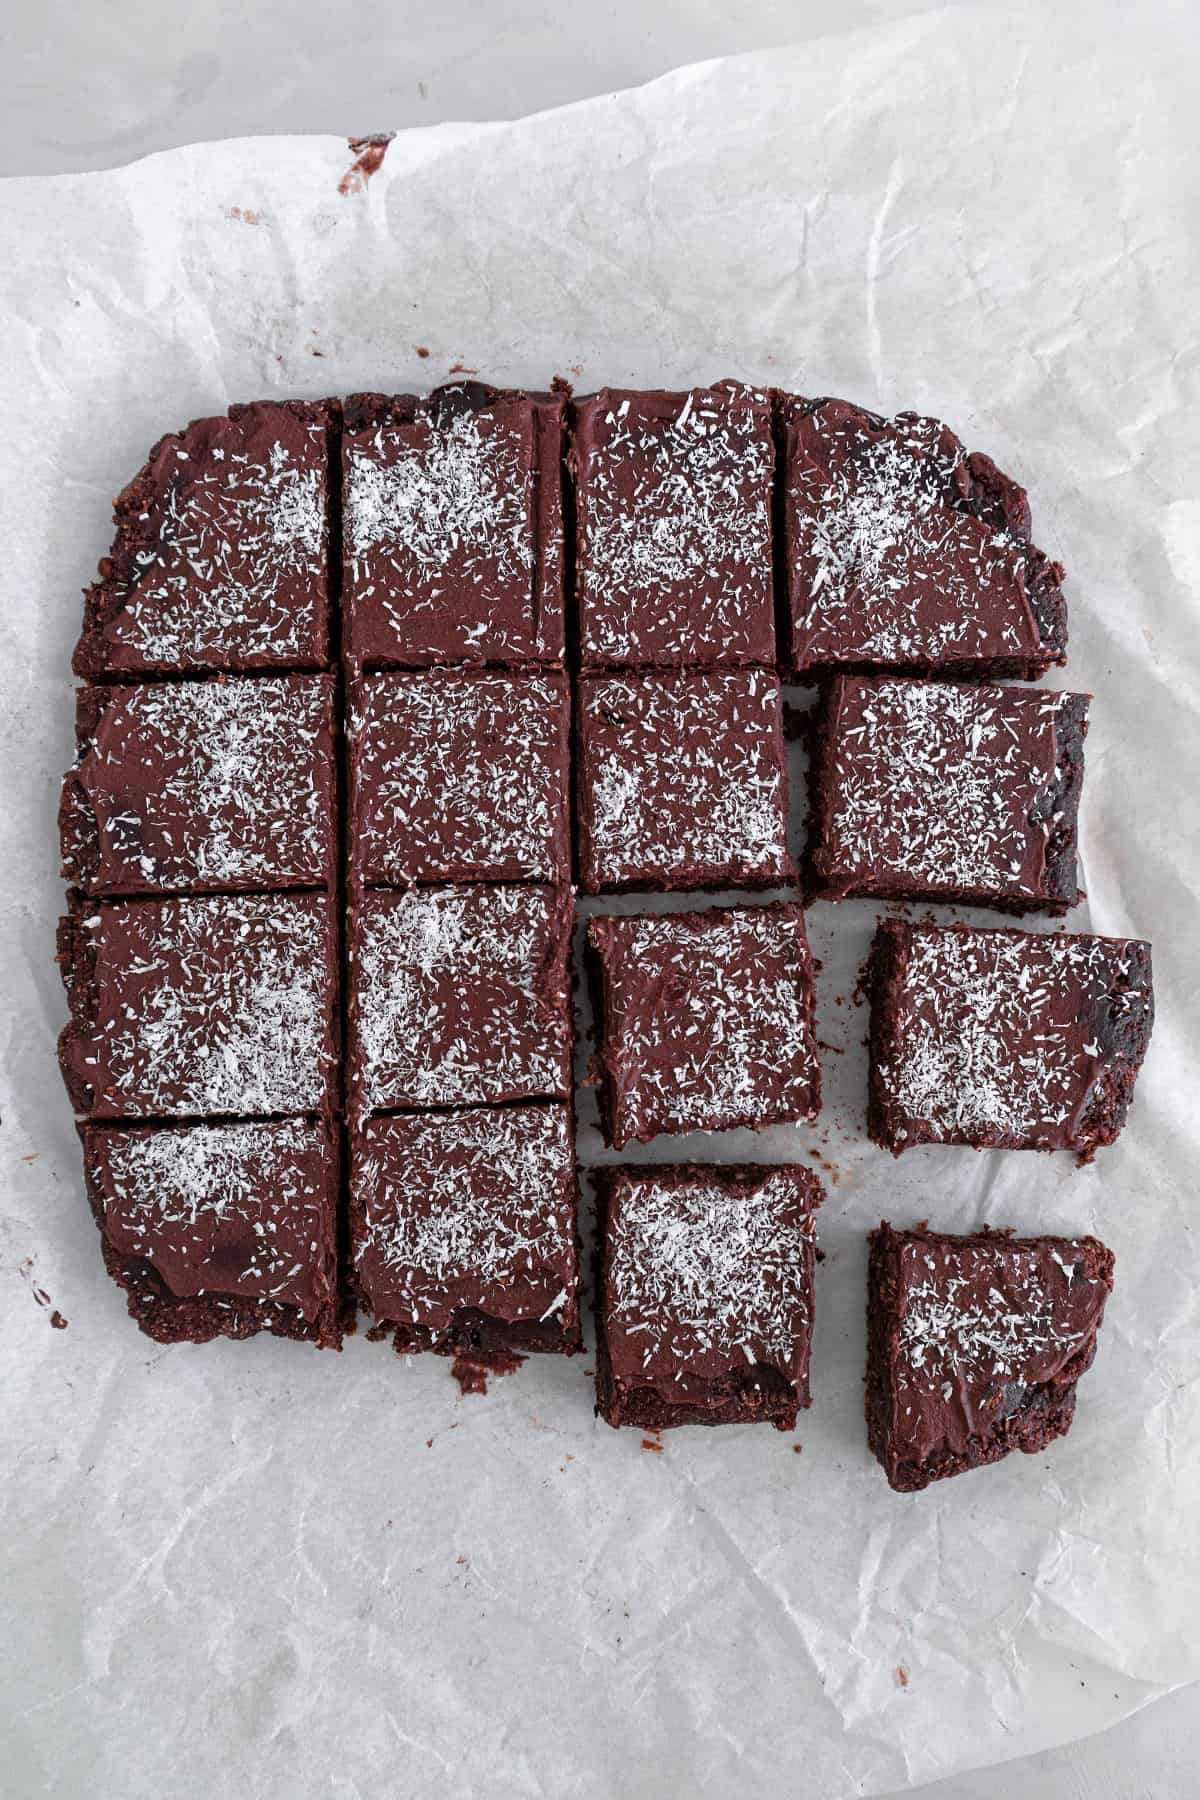 Chocolate coconut slice cut in squares 